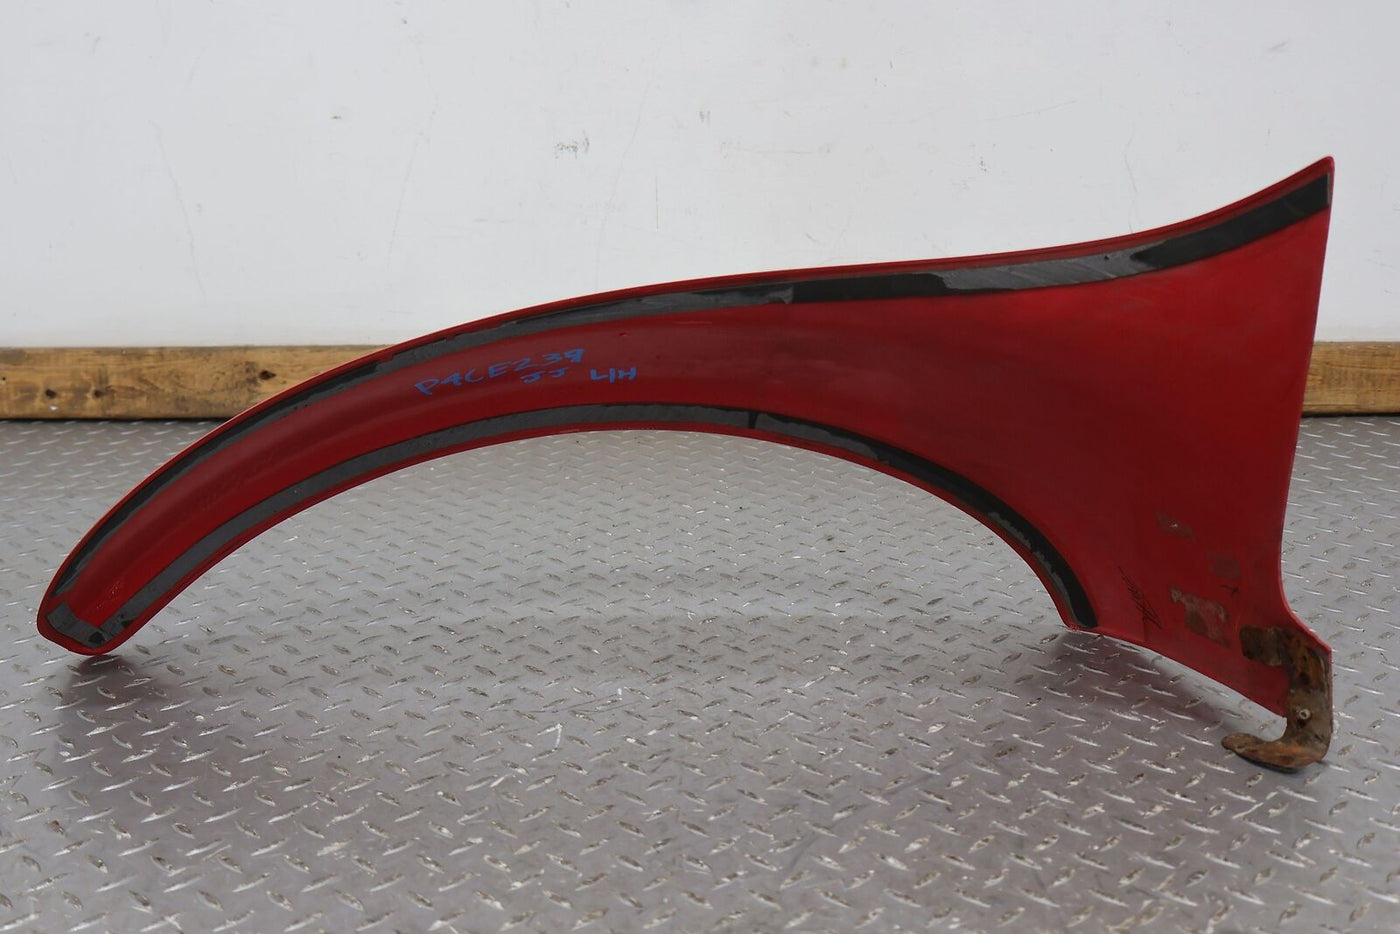 03-06 Chevy SSR Left LH Rear Rocker Moulding (Redline Red 70U) Rear Only